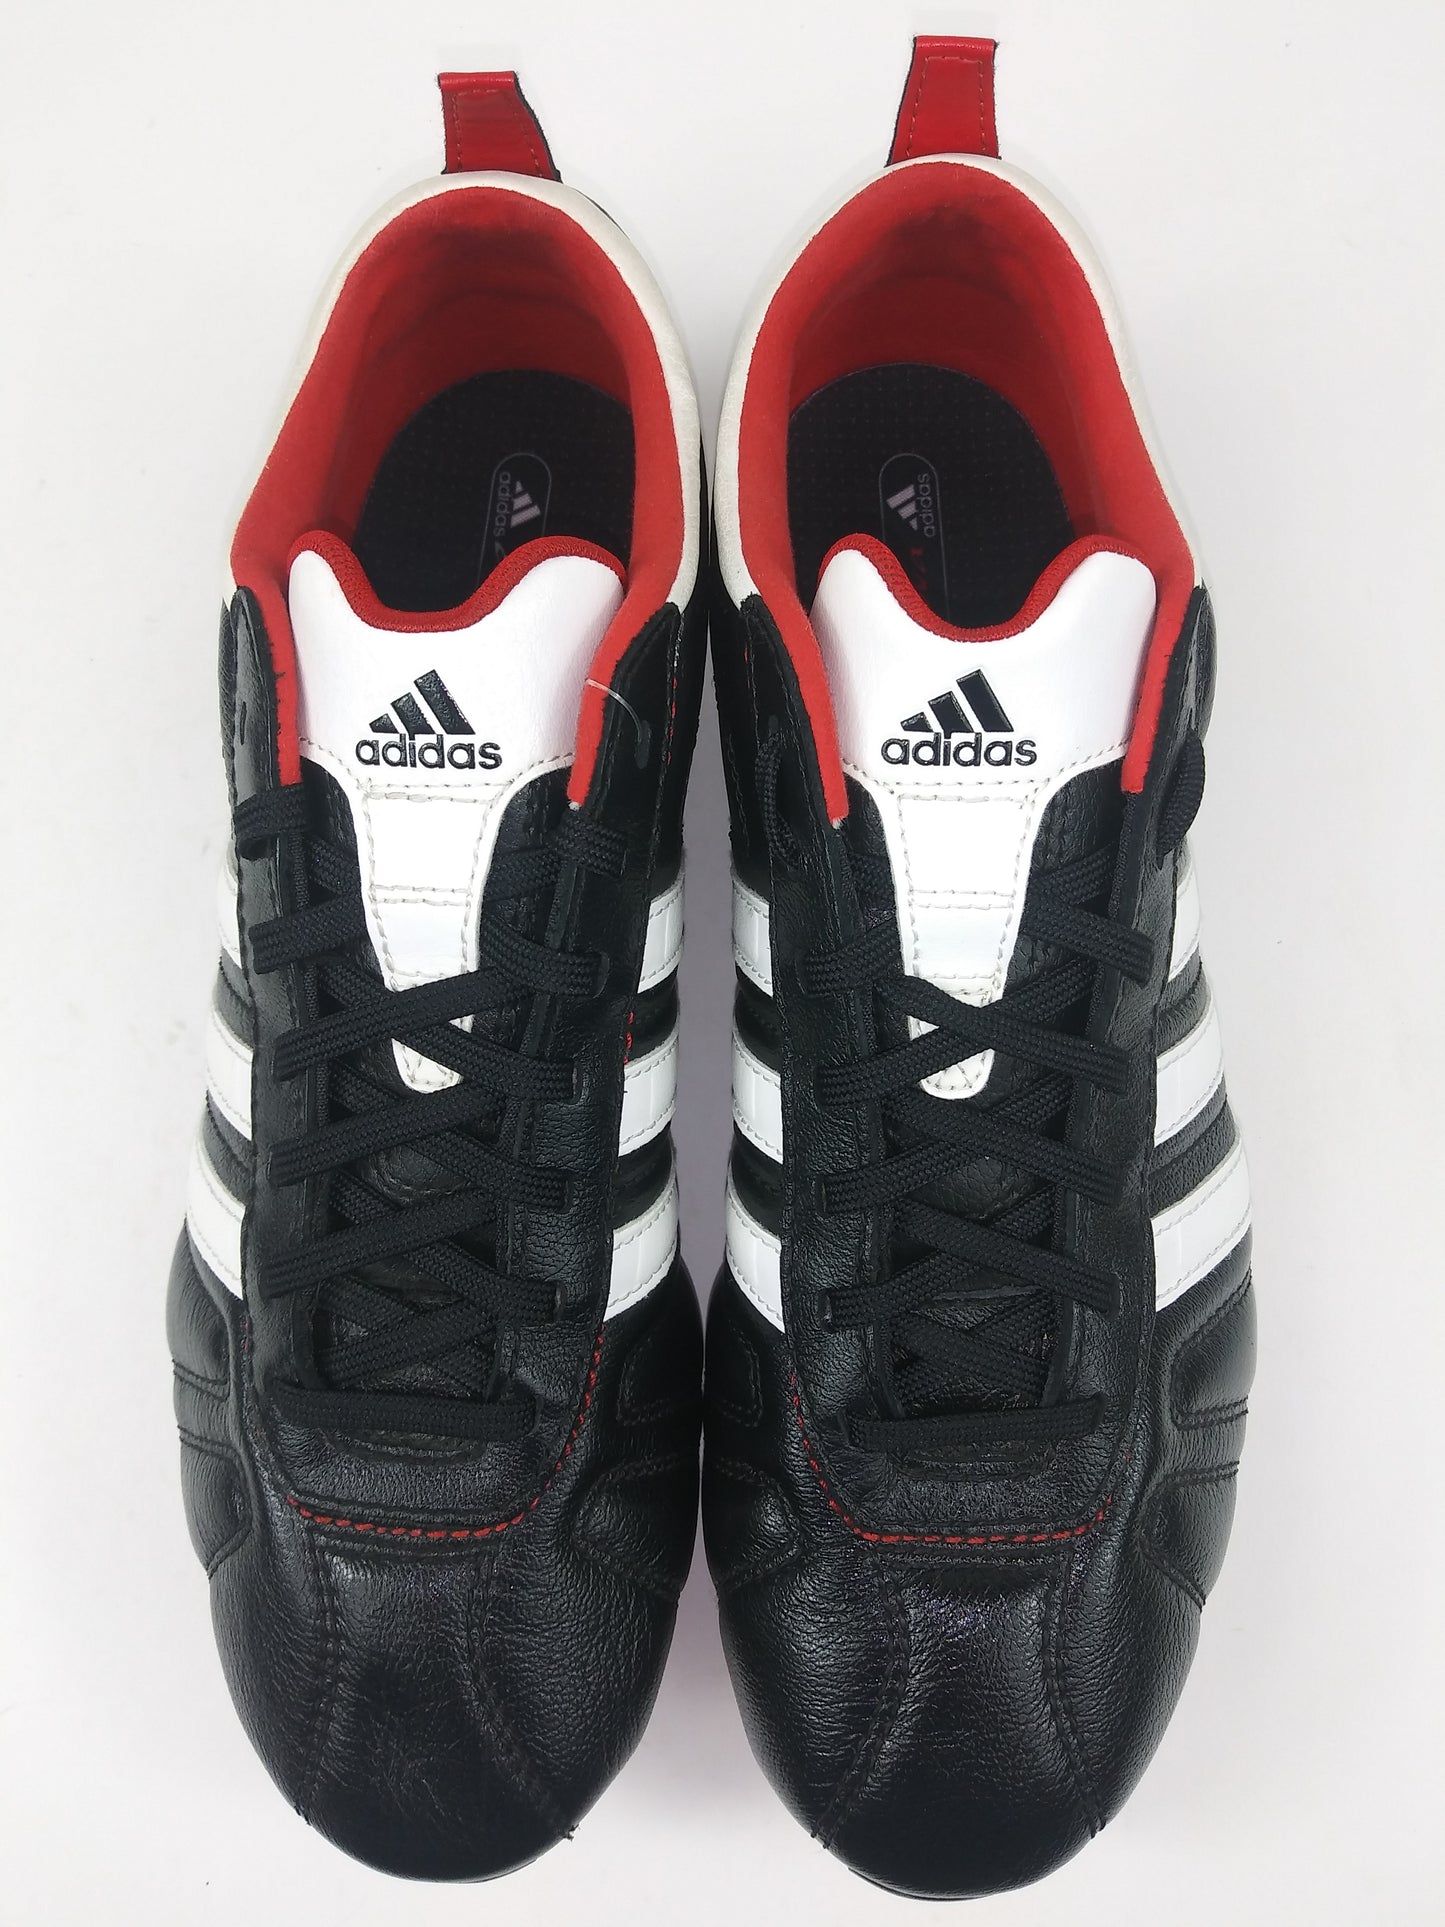 Adidas Adinova IV SG Black Red